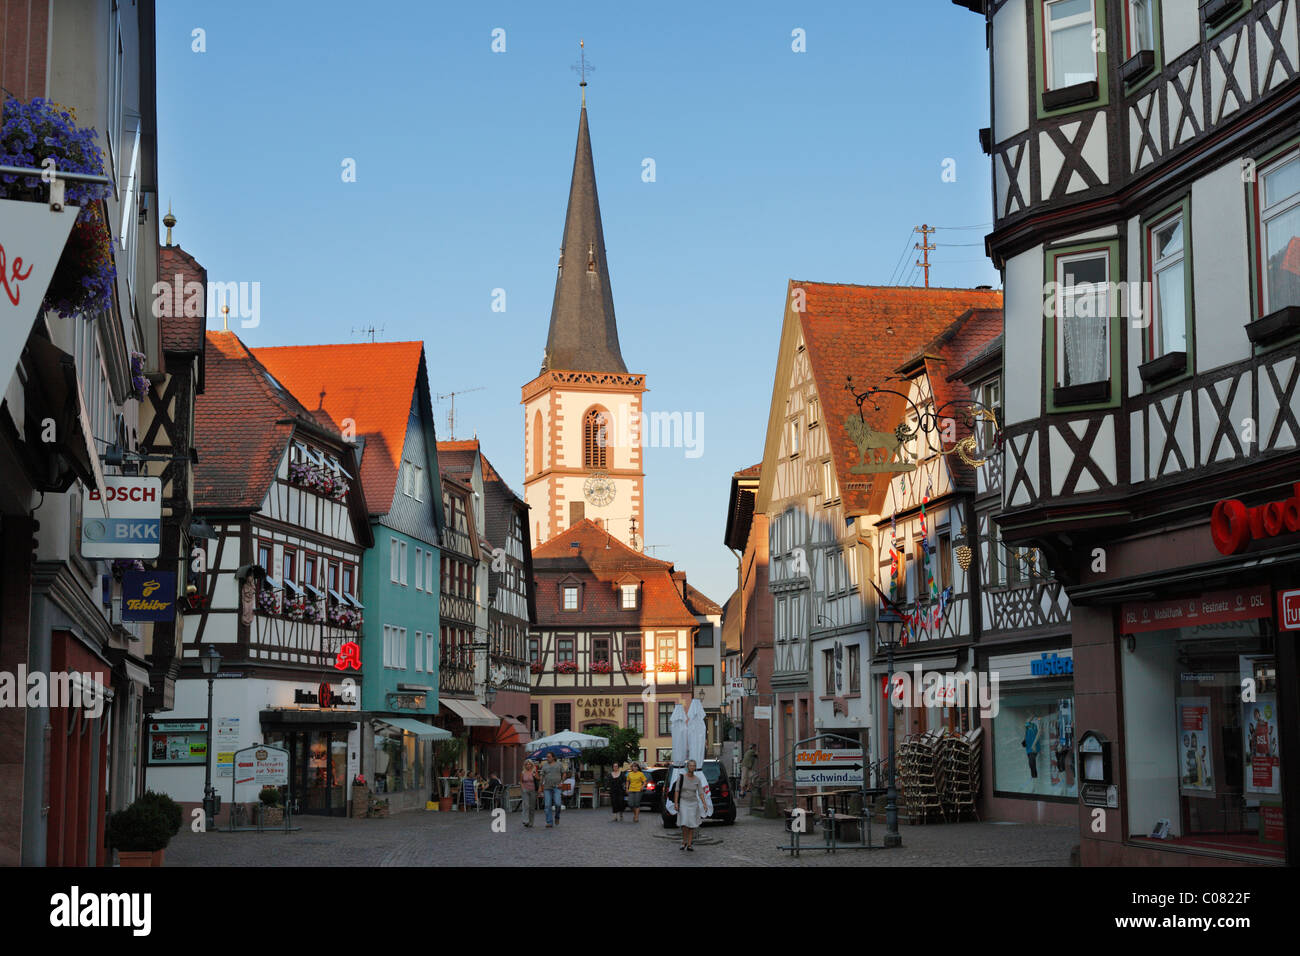 Main street with church of St. Michael, Lohr am Main, Mainfranken, Lower Franconia, Franconia, Bavaria, Germany, Europe Stock Photo